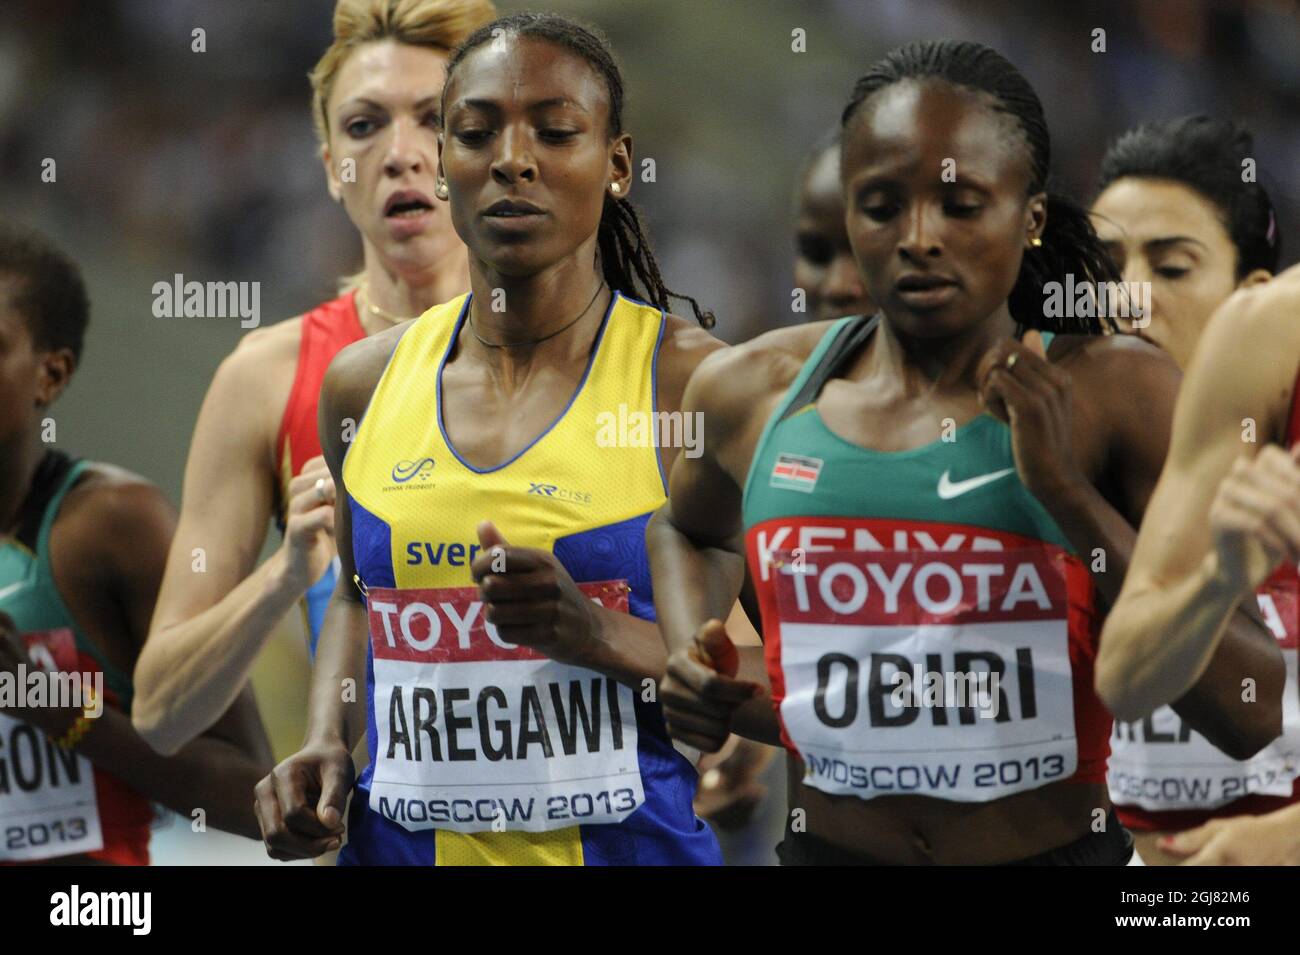 Sweden's Abeba Aregawi won the women's 1500 metres final at the 2013 IAAF World Championships at the Luzhniki stadium in Moscow on August 15, 2013. Photo Erik Martensson / SCANPIX / Kod 10400  Stock Photo